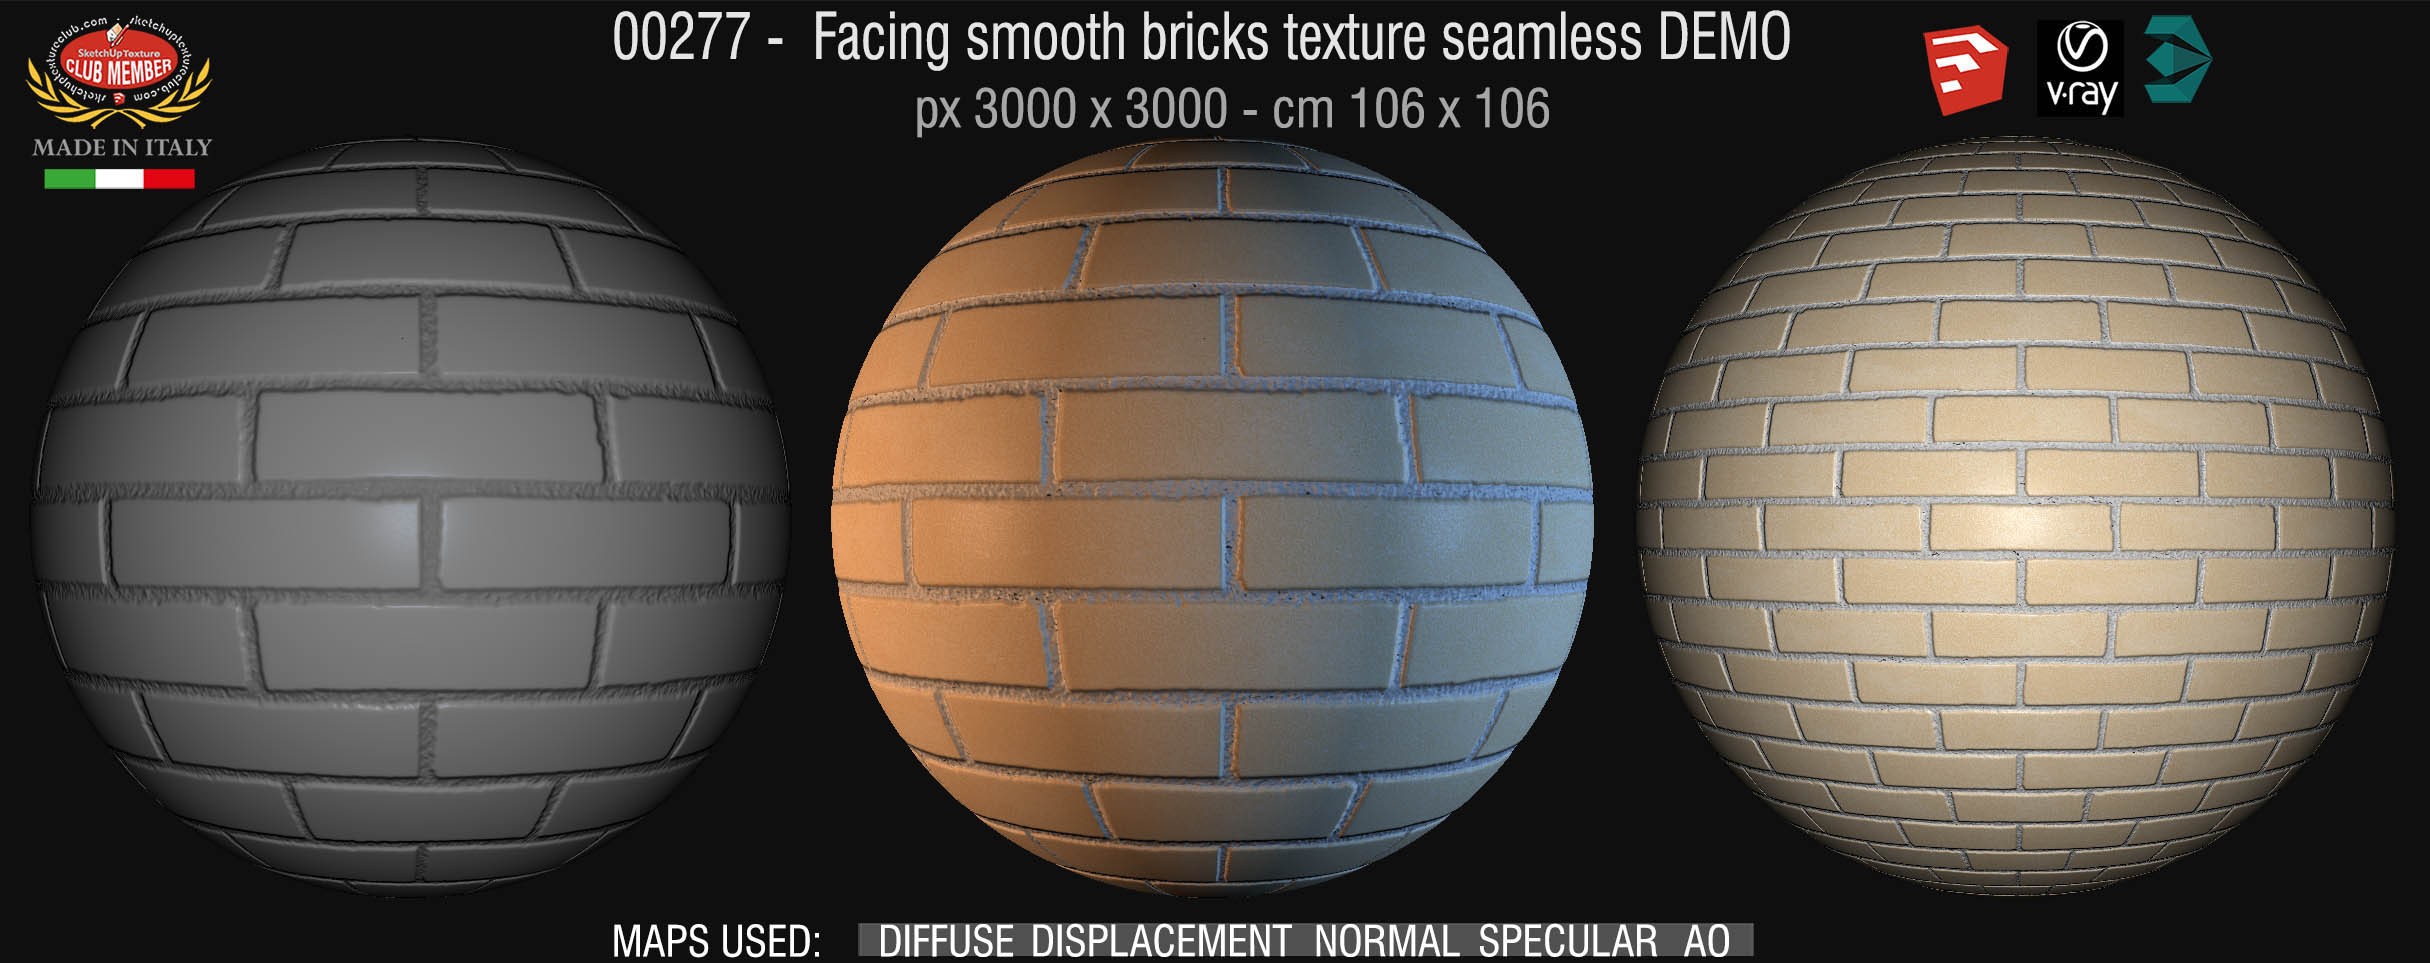 00277 Facing smooth bricks texture seamless + maps DEMO